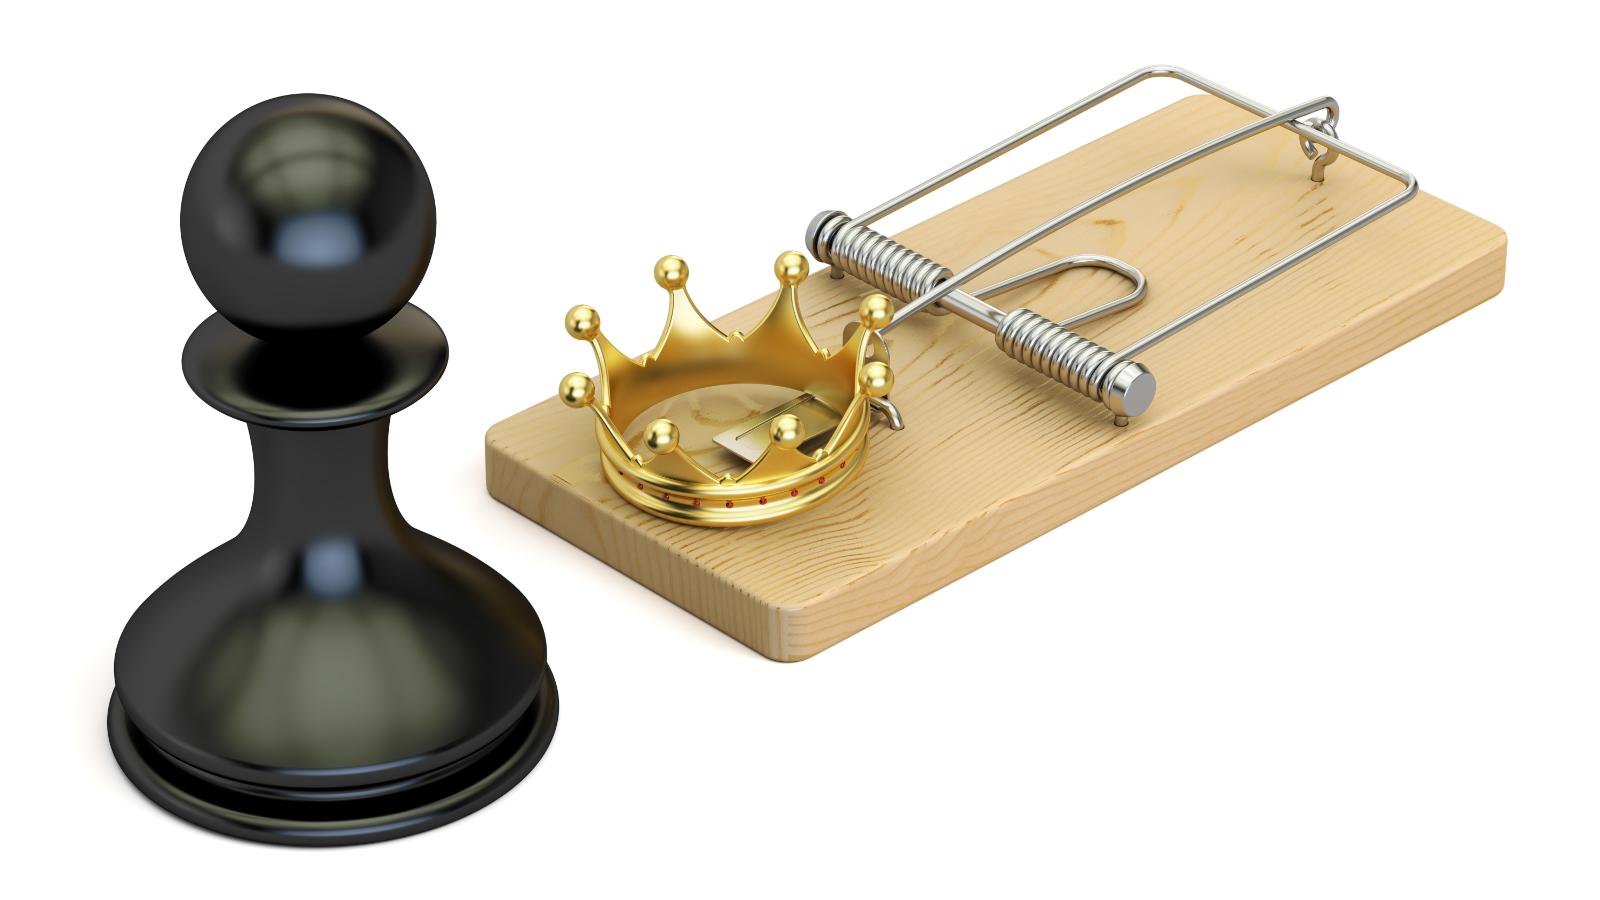 Top 7 armadilhas de xadrez para as peças pretas. 